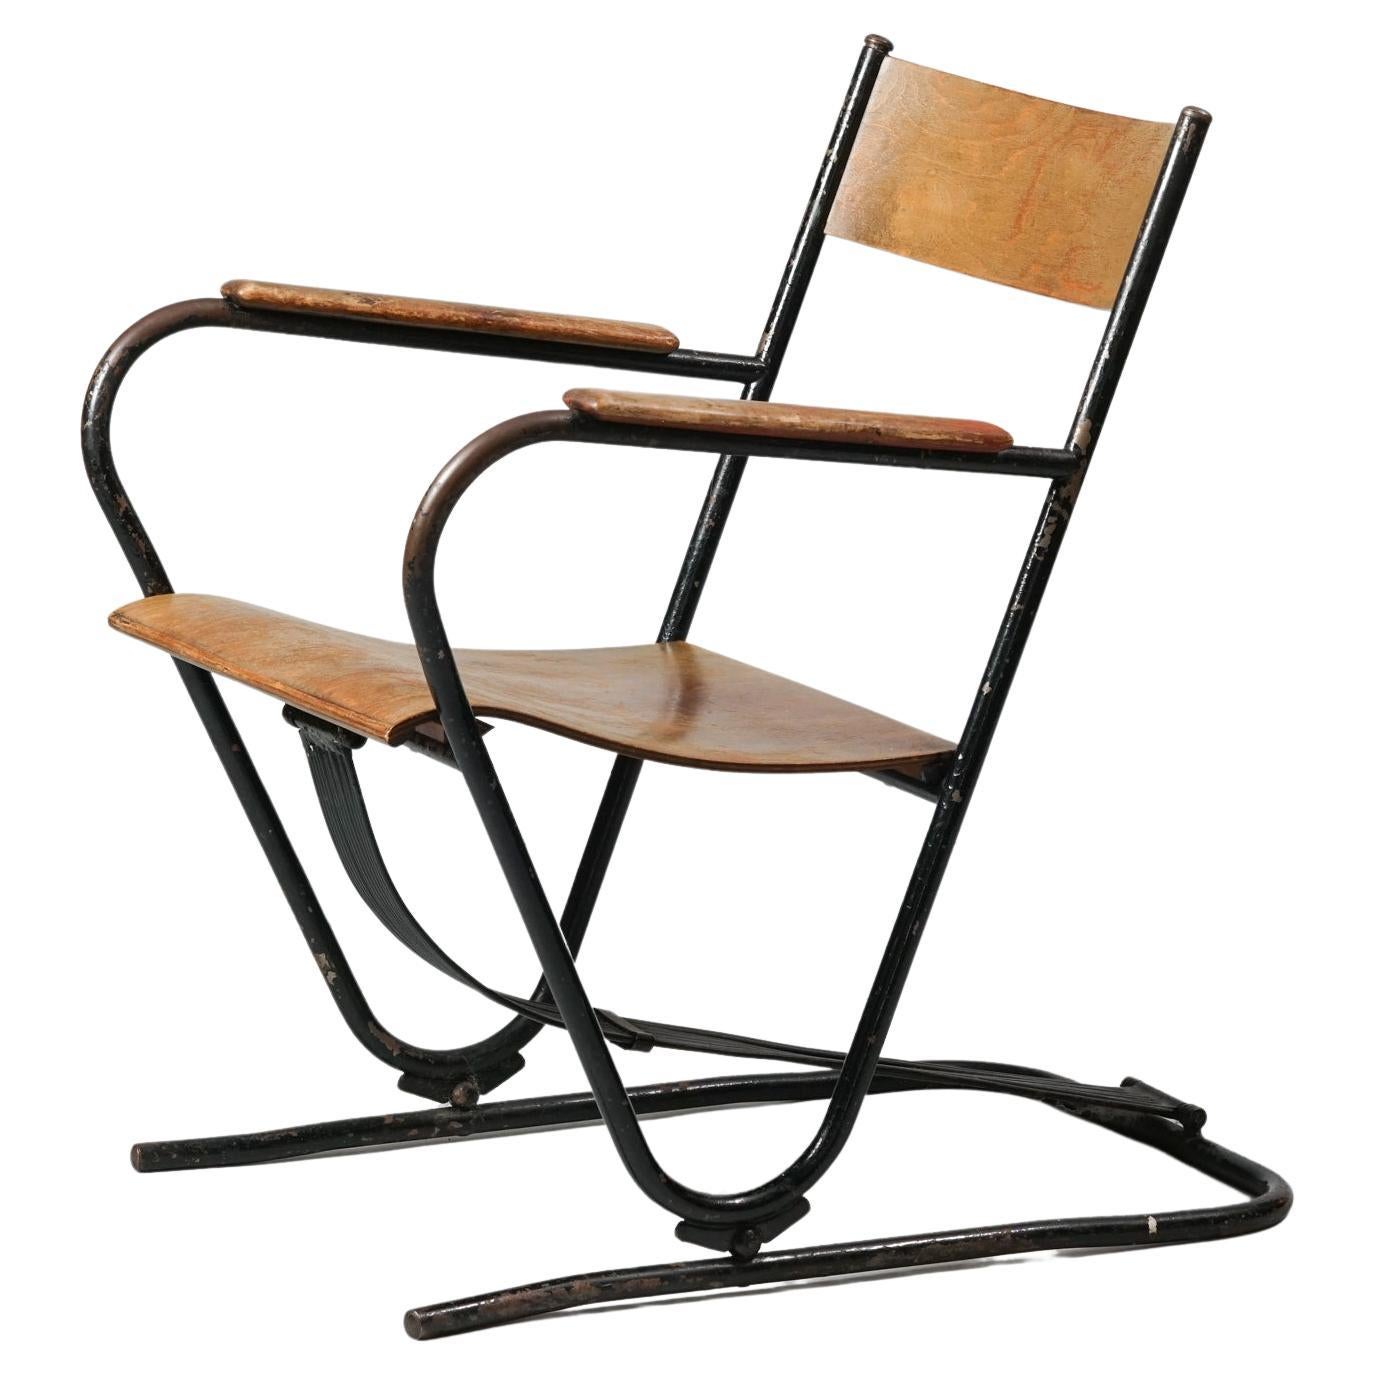 FInnish Rocking Chair Model "Sirkka", Veljekset Lampila, 1930s